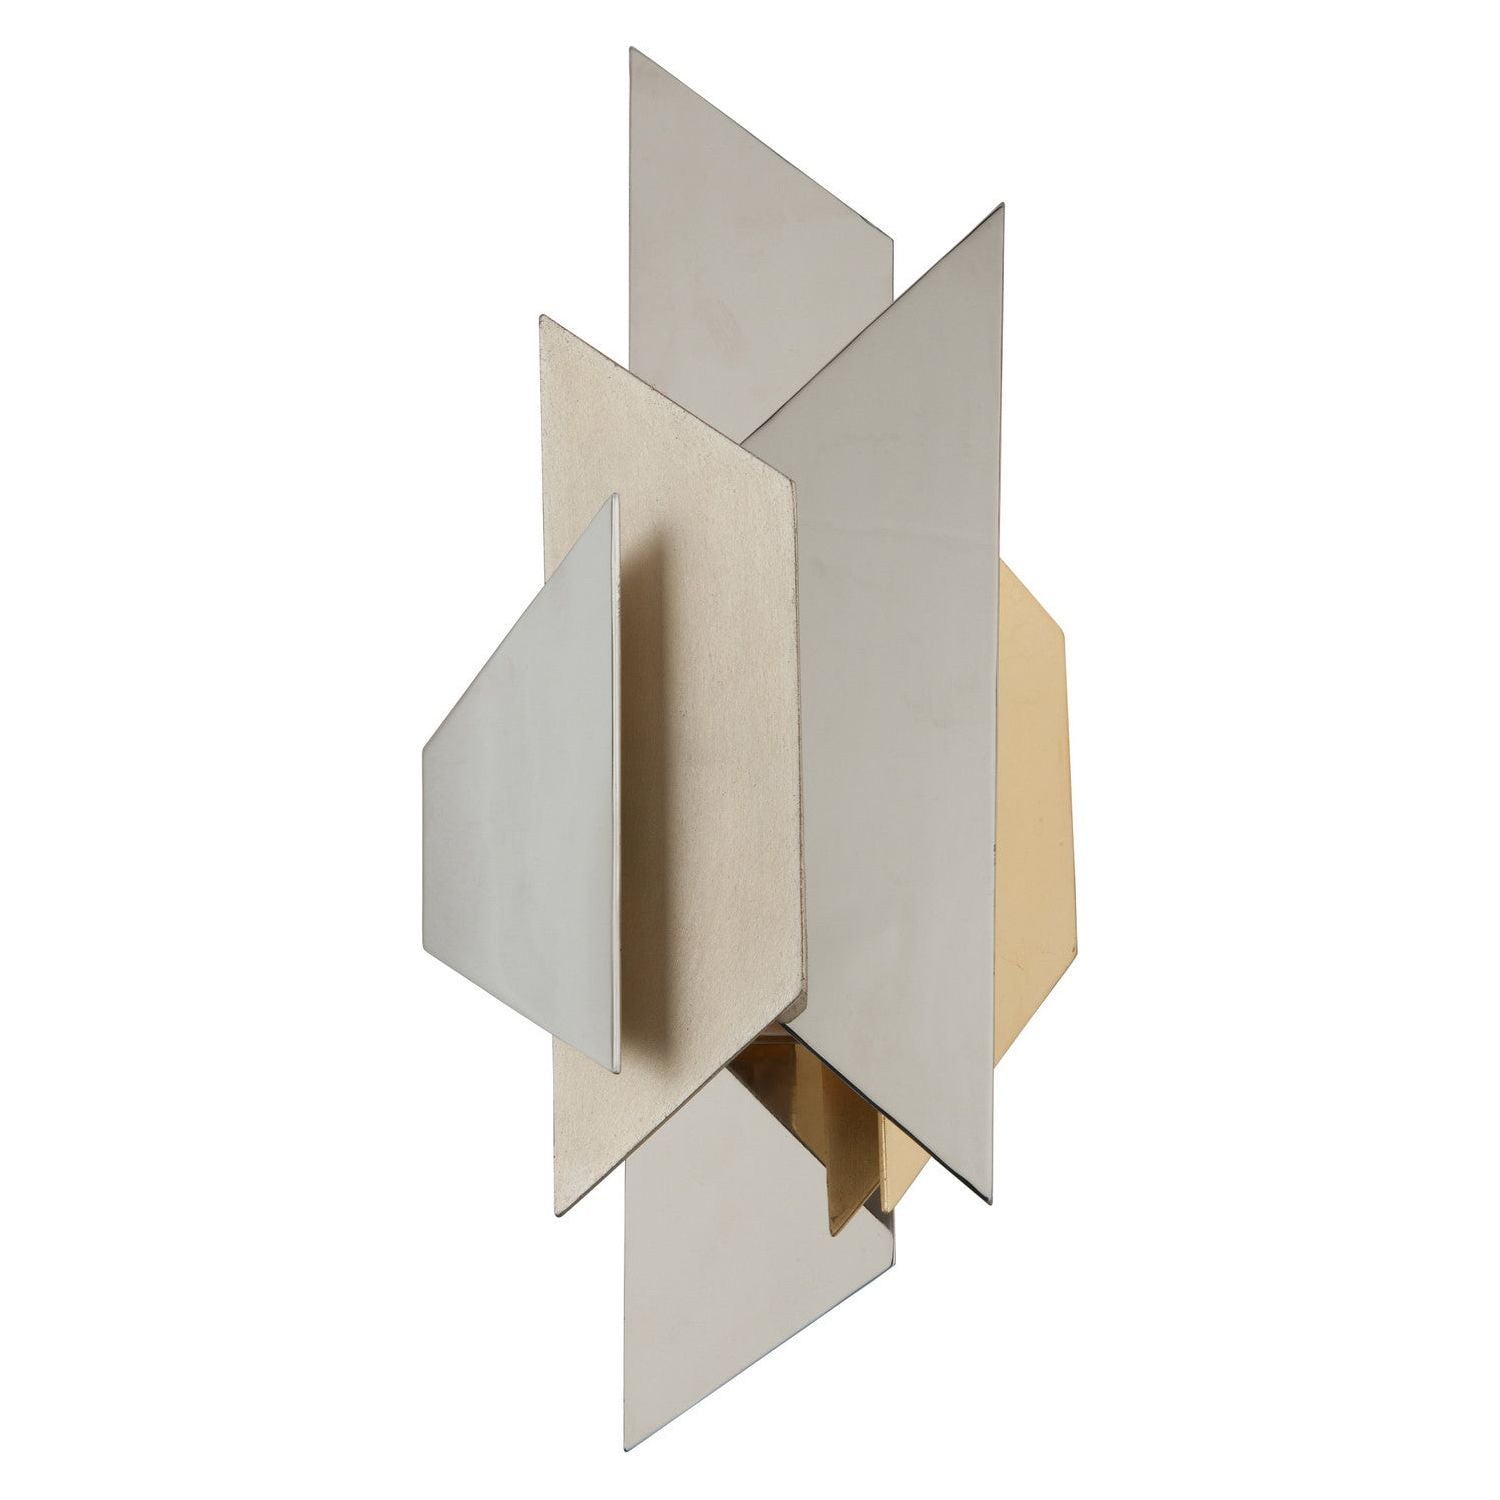 Corbett Lighting - 207-12-SS/WSL/GL - Two Light Wall Sconce - Modernist - Pol Ss W Silver/Gold Leaf